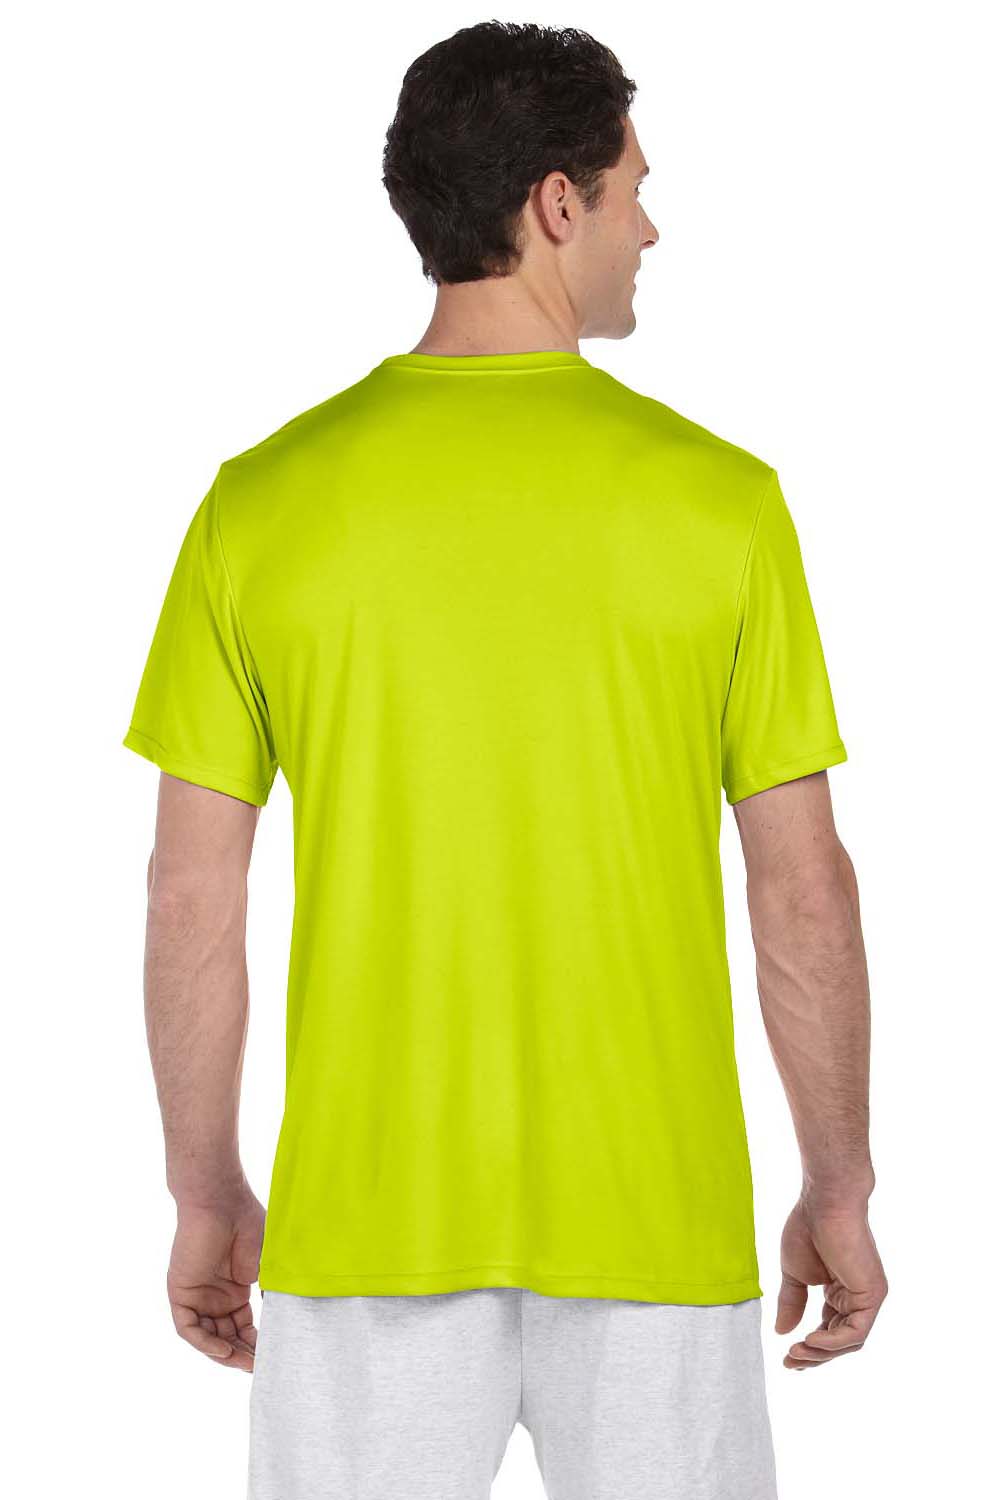 Hanes 4820 Mens Cool DRI FreshIQ Moisture Wicking Short Sleeve Crewneck T-Shirt Safety Green Back